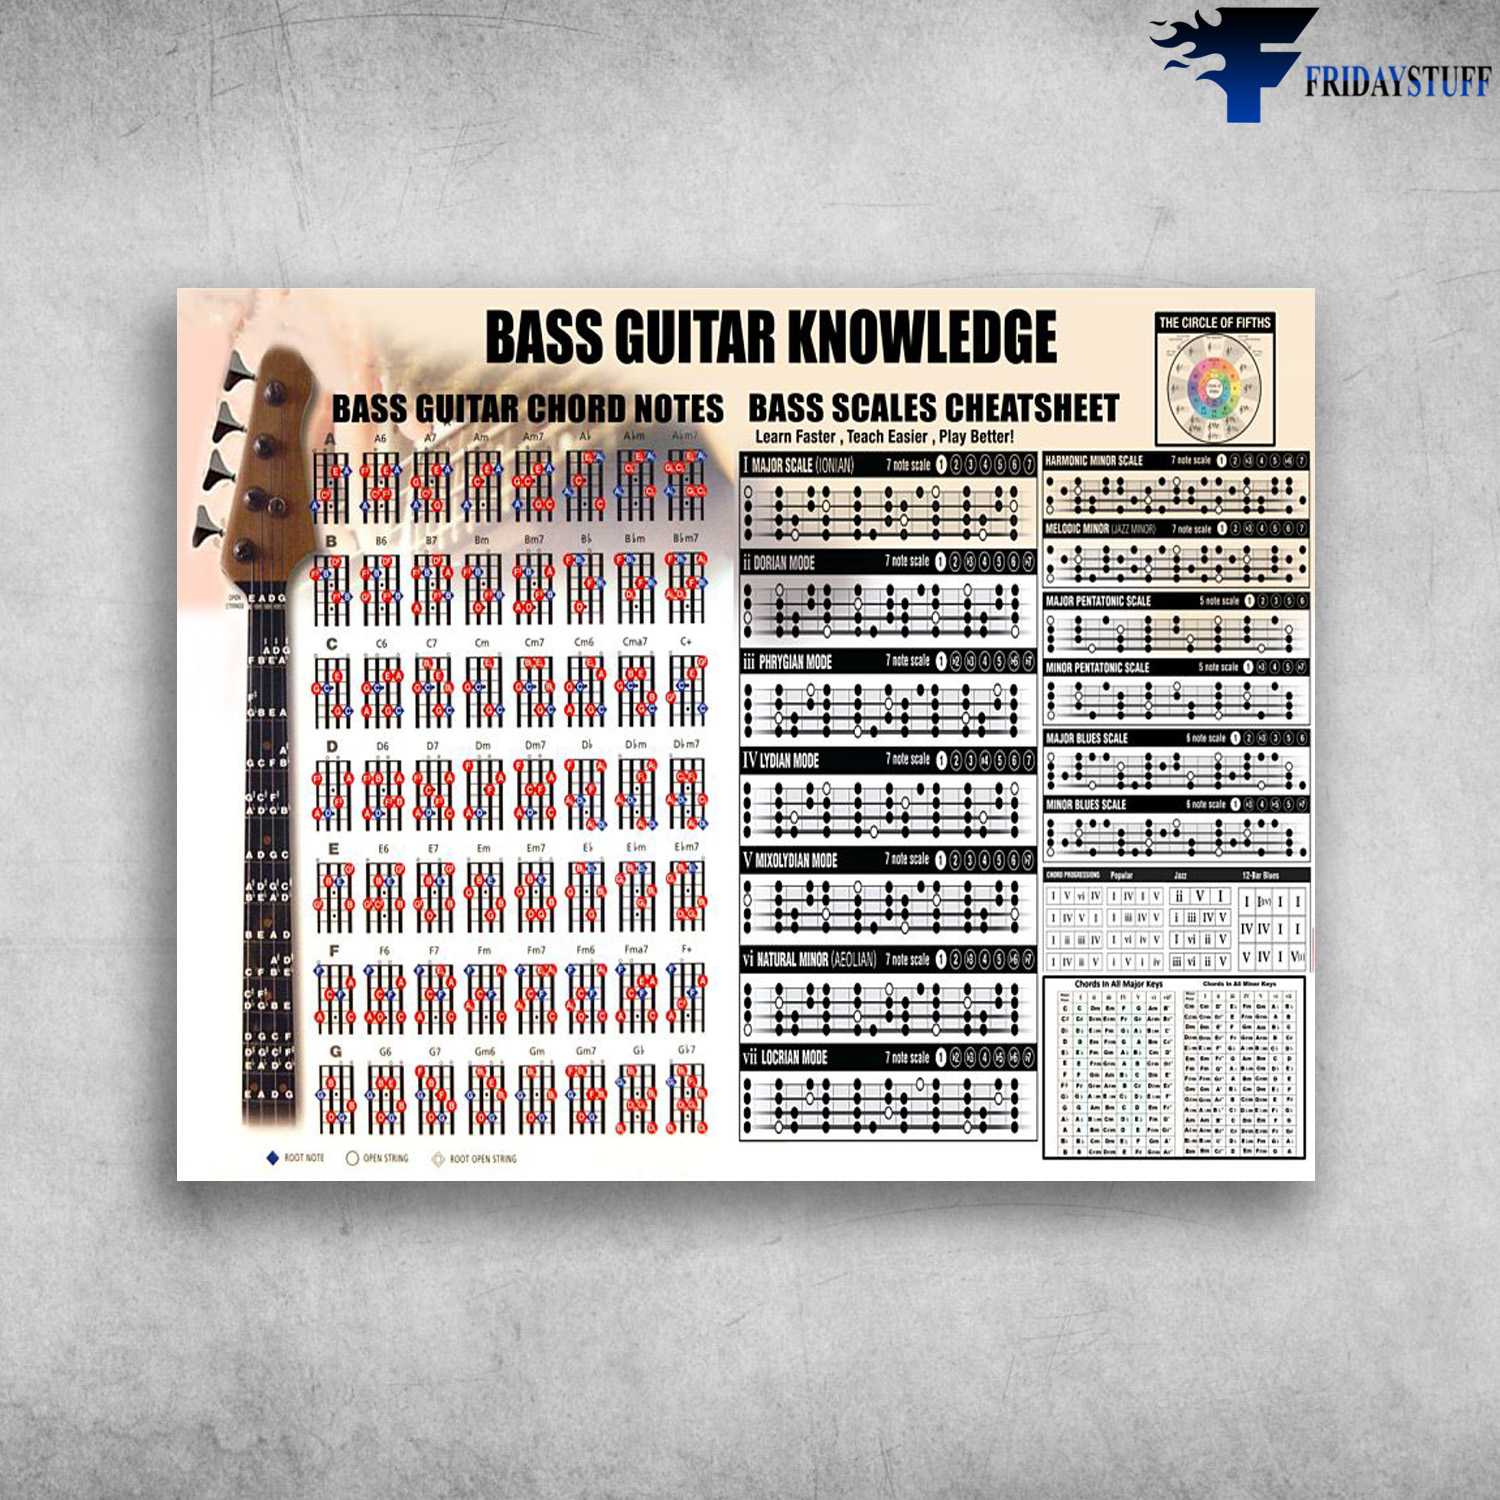 Bass Guitar Knowledge Bass Guitar Chord Notes Bass Scales Cheatsheet FridayStuff